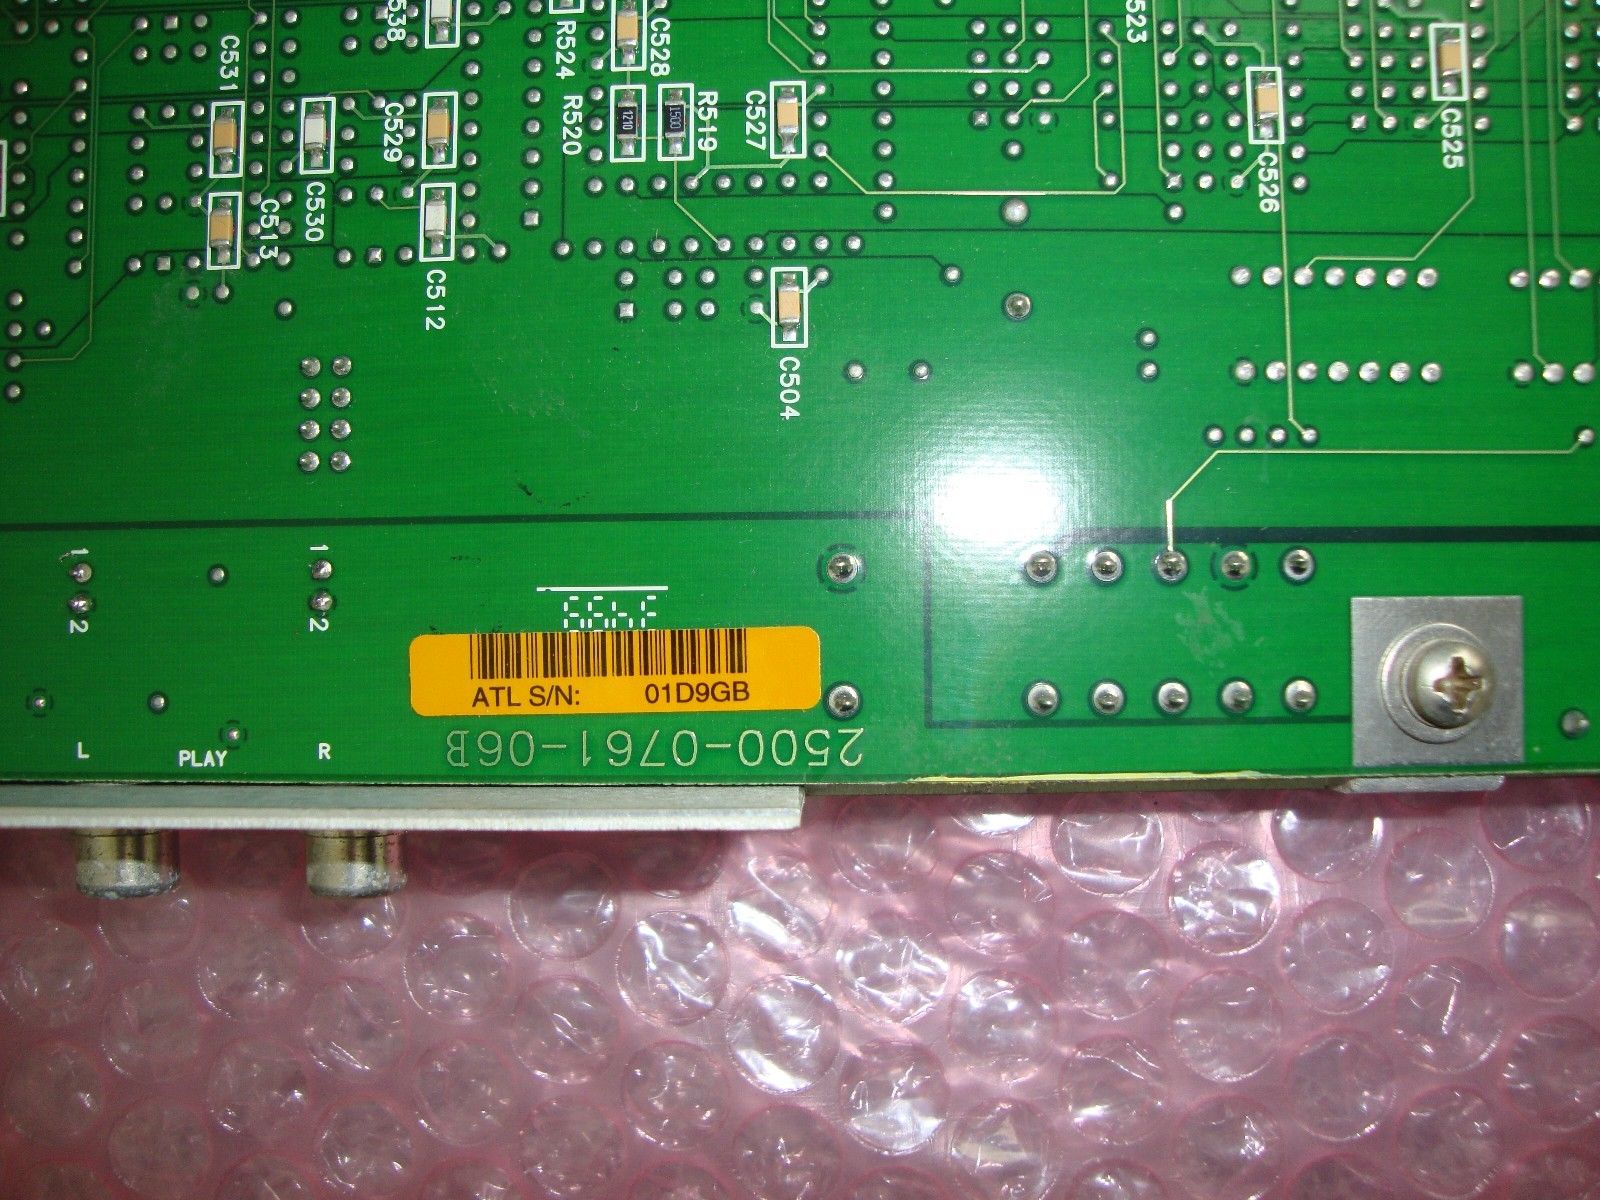 ATL Philips HDI-5000   Ultrasound 7500-1328-02a  board